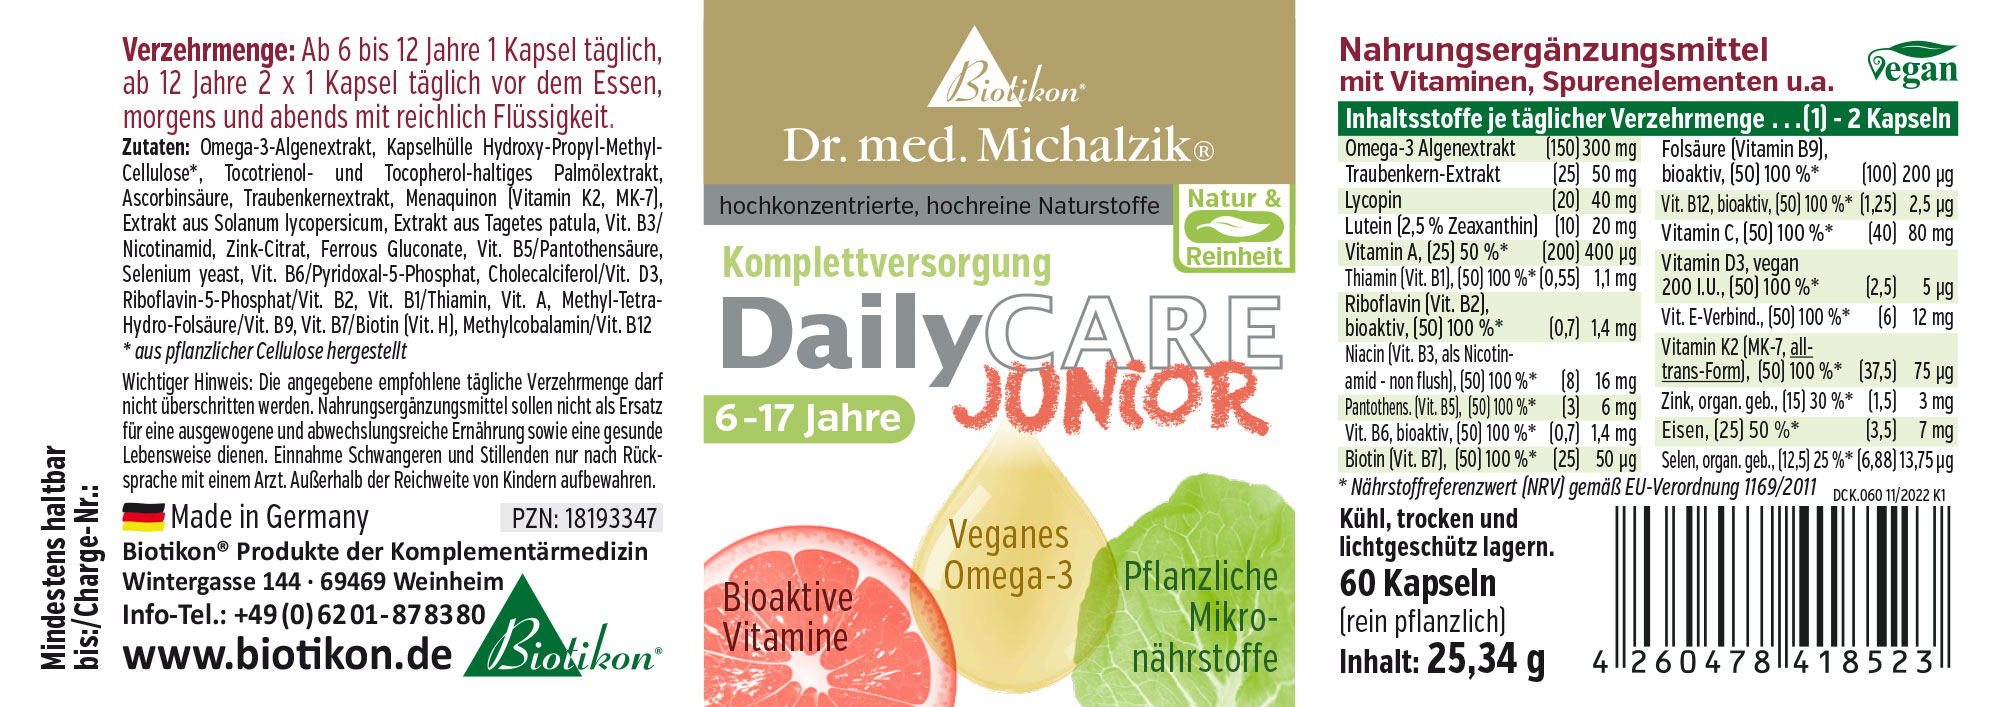 DailyCare JUNIOR di Dr. med. Michalzik